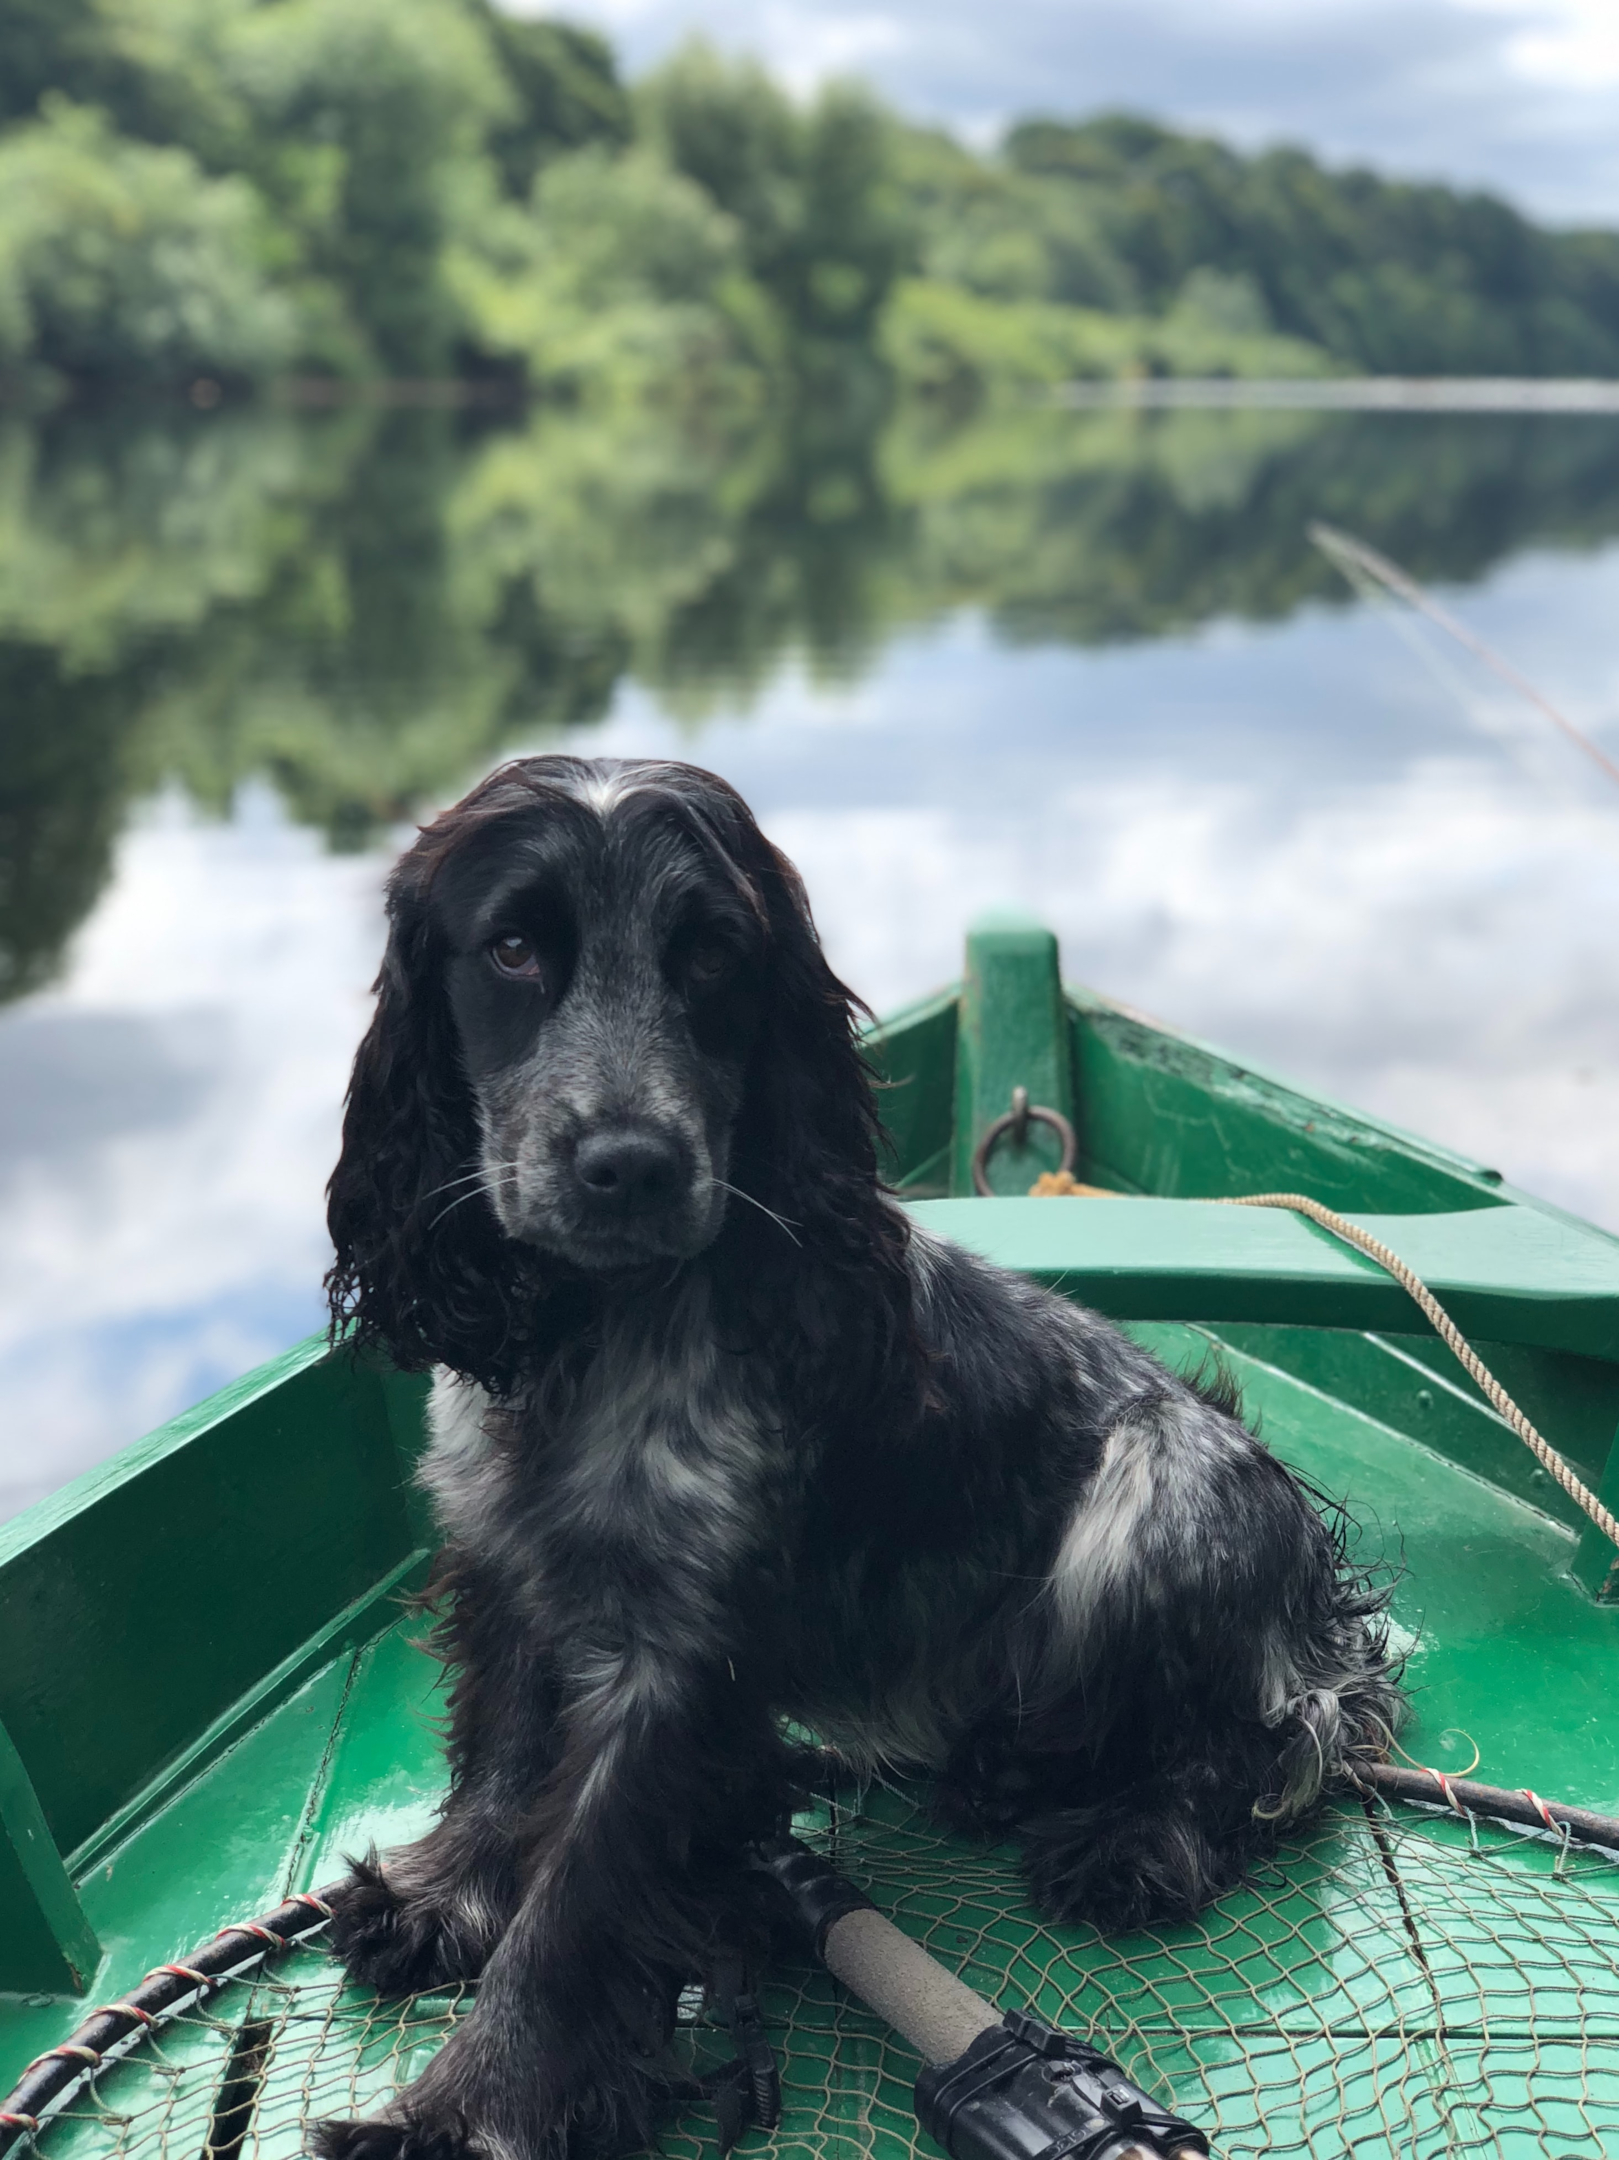 Black dog on green boat on lake